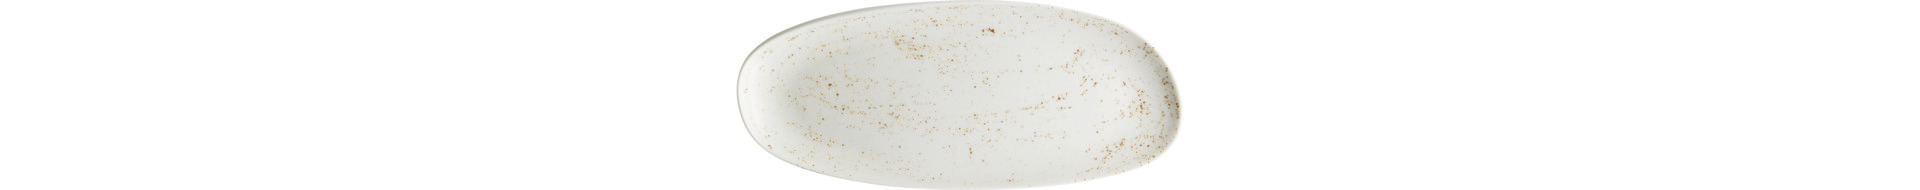 Coupplatte oval 179 x 88 mm Unique weiß